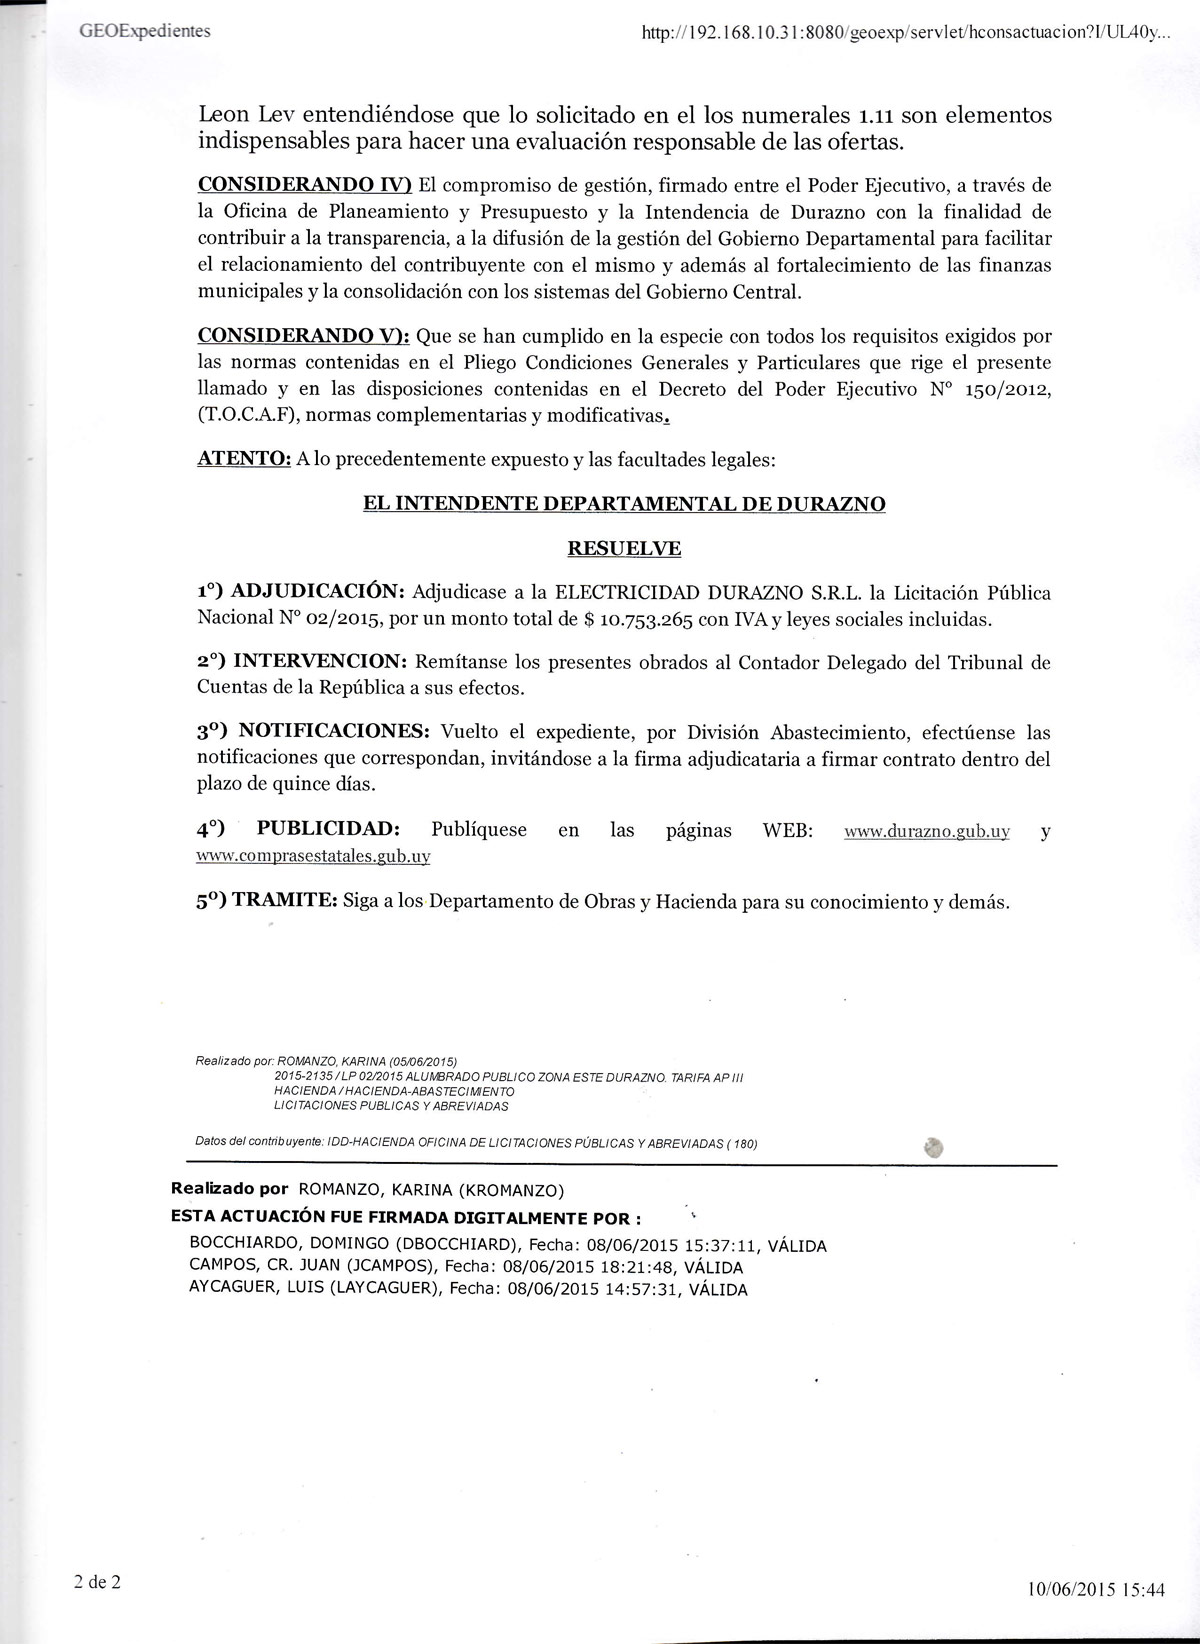 RESOLUCION DE LIC PUBLICA 02 2015 1B